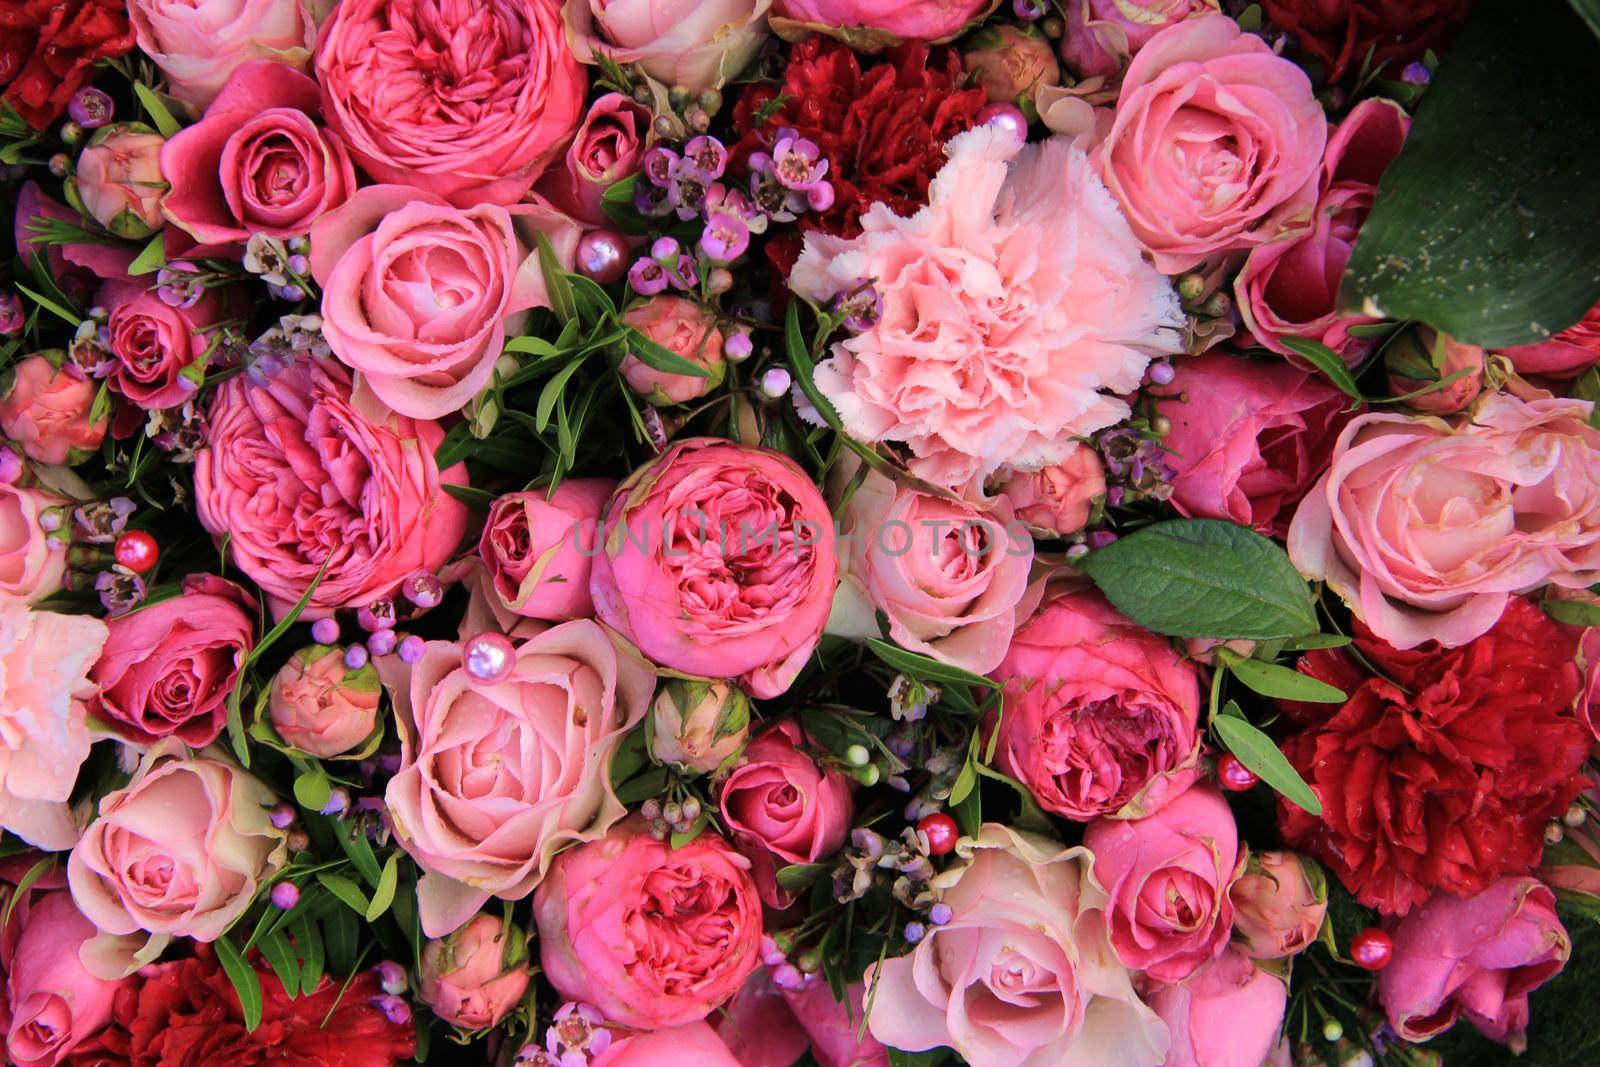 Mixed wedding flower arrangement: various flowers in different pastel colors